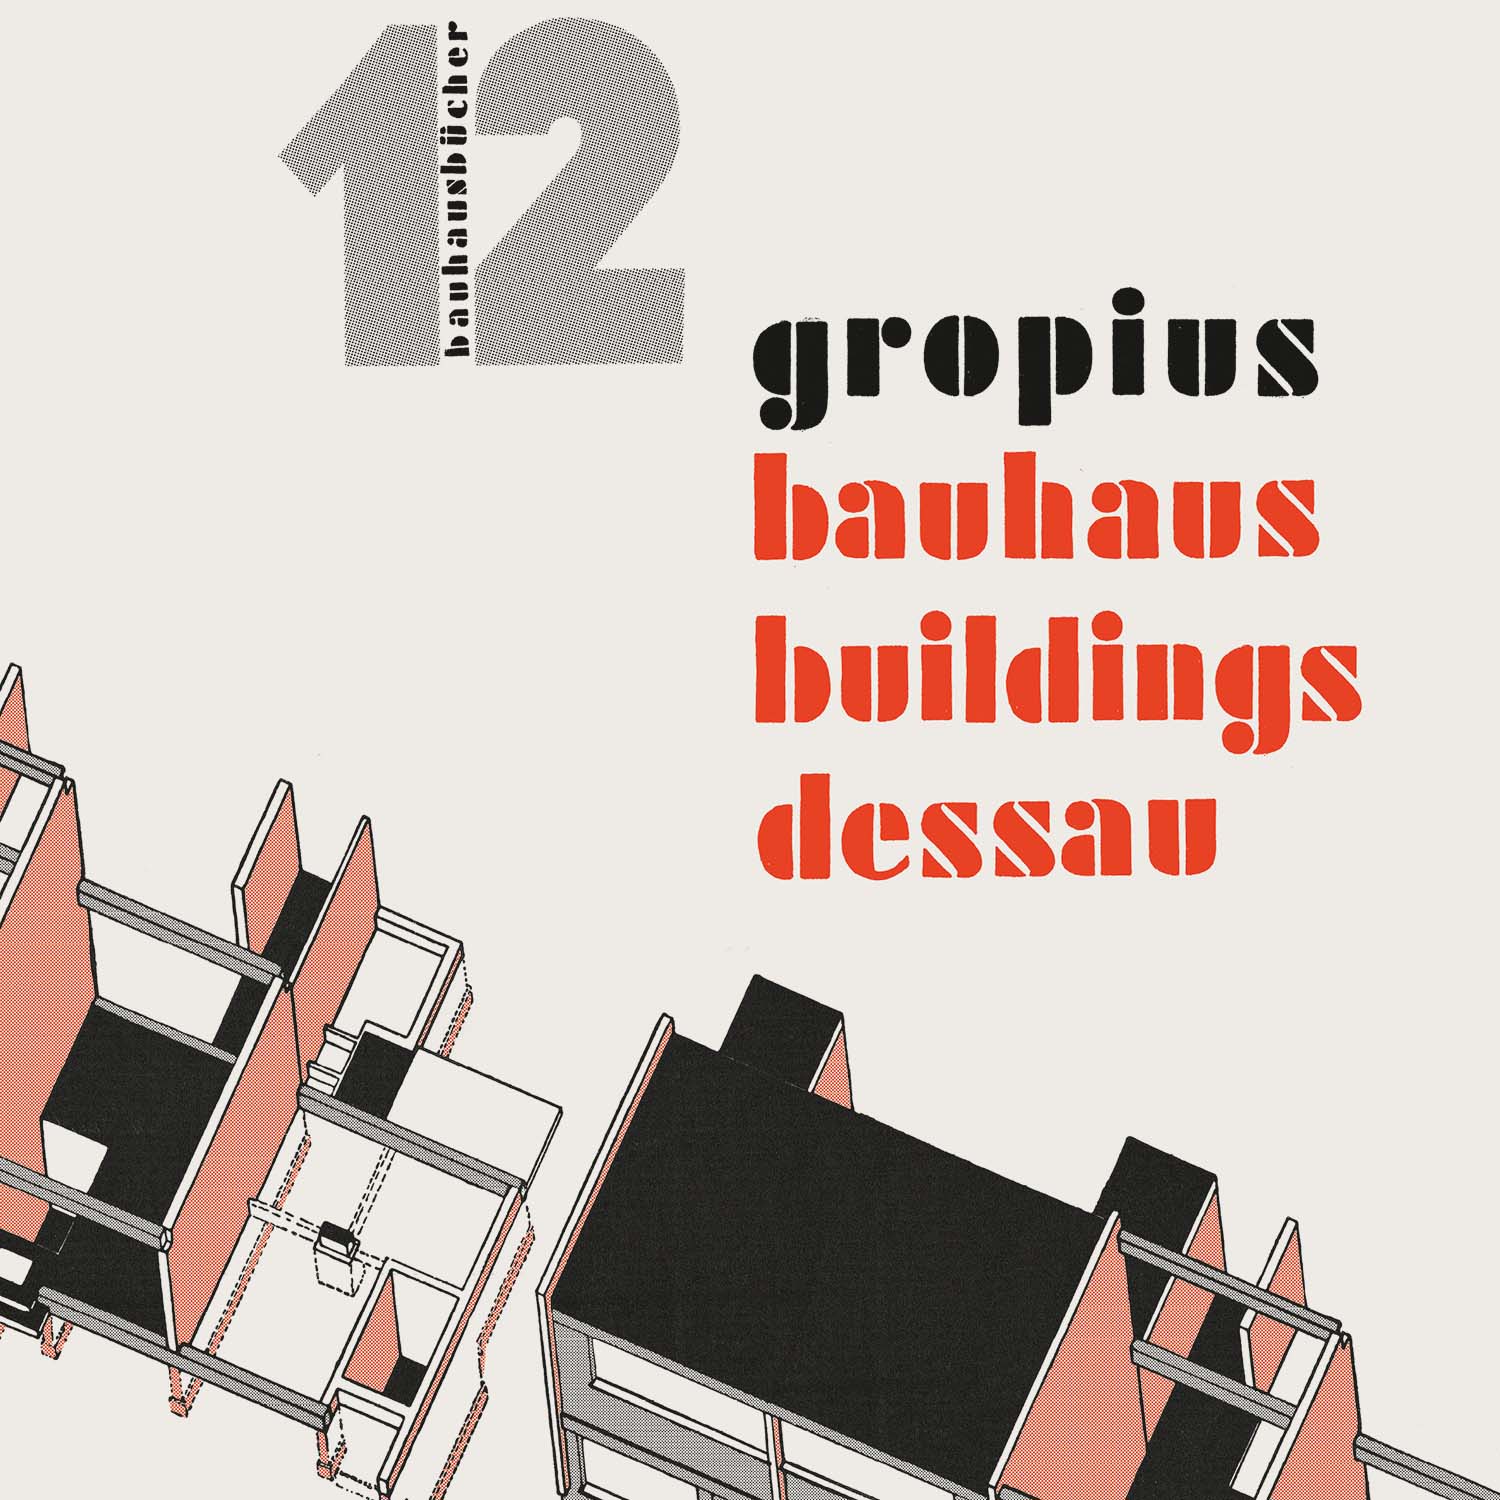 Afbeelding van Bauhaus Gebouwen Dessau